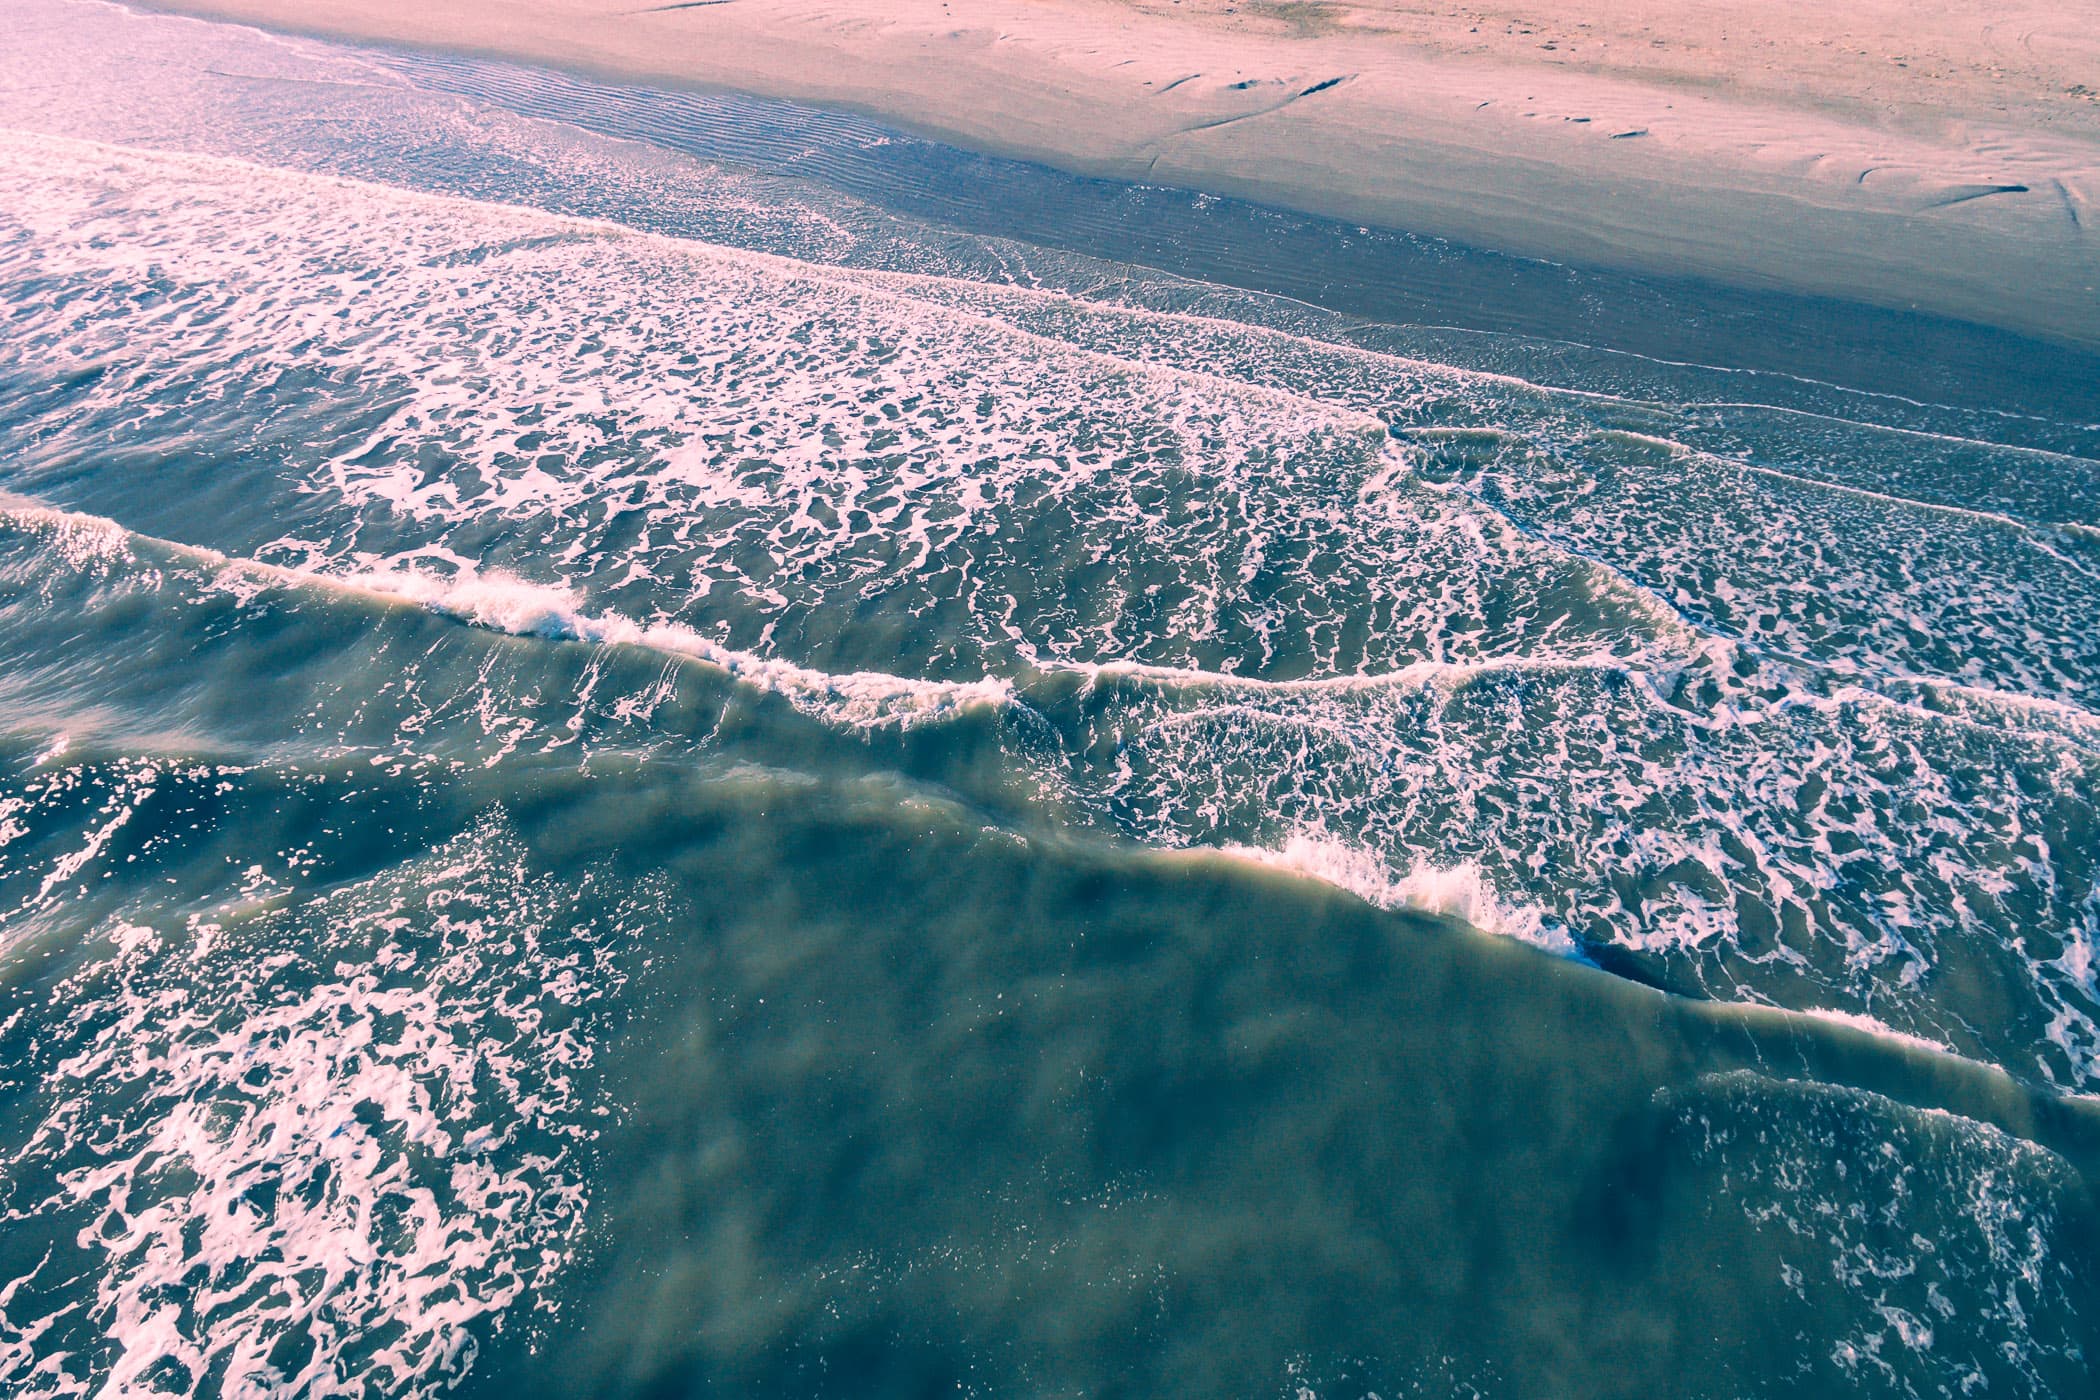 Waves crash onshore in an aerial shot of Galveston, Texas’ East Beach.